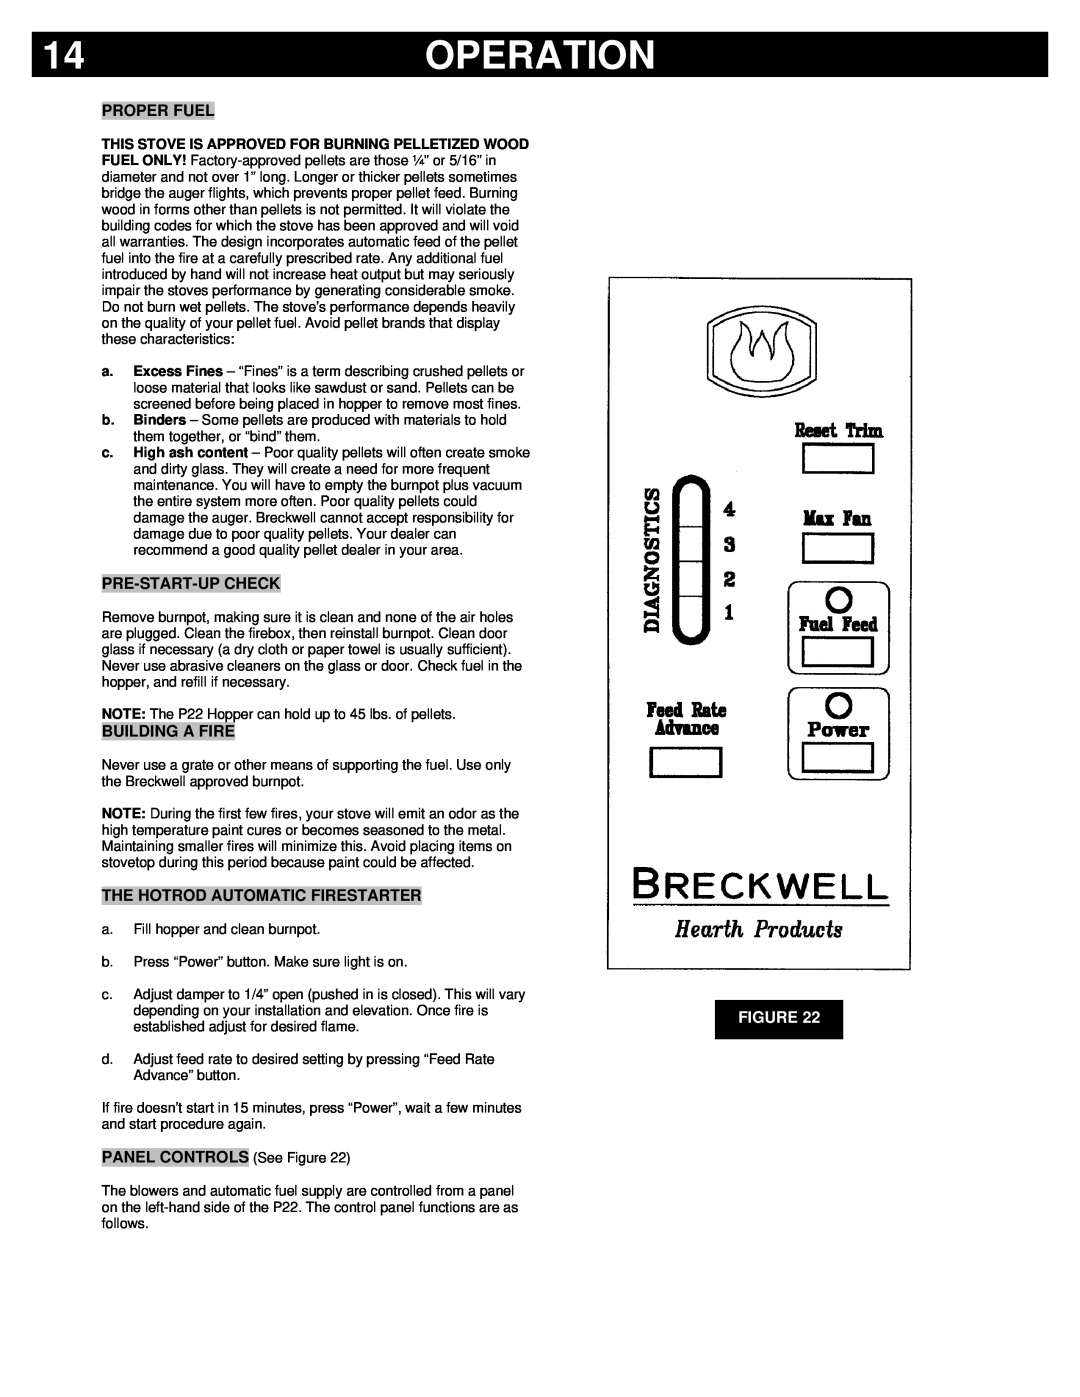 Breckwell P22FSA, P22FSL, P22I Operation, Proper Fuel, Pre-Start-Upcheck, Building A Fire, The Hotrod Automatic Firestarter 